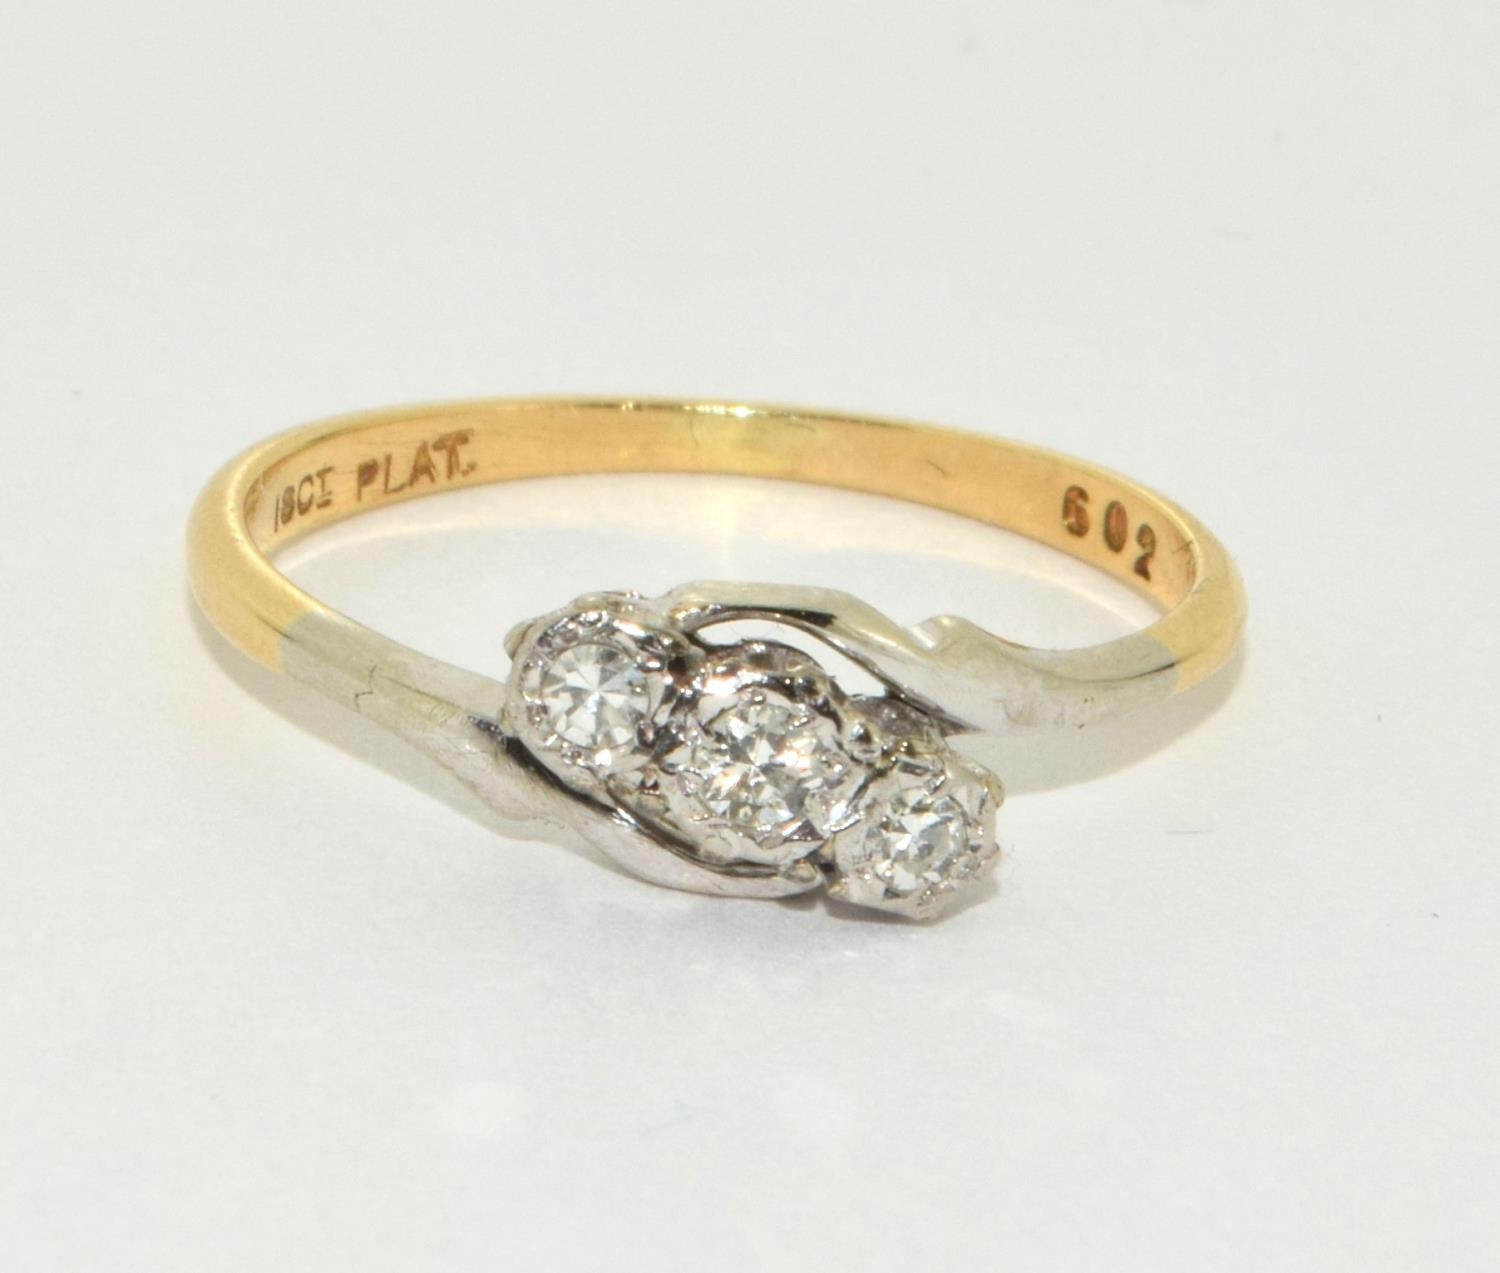 18ct gold ladies 3 stone Diamond twist ring size M - Image 5 of 5